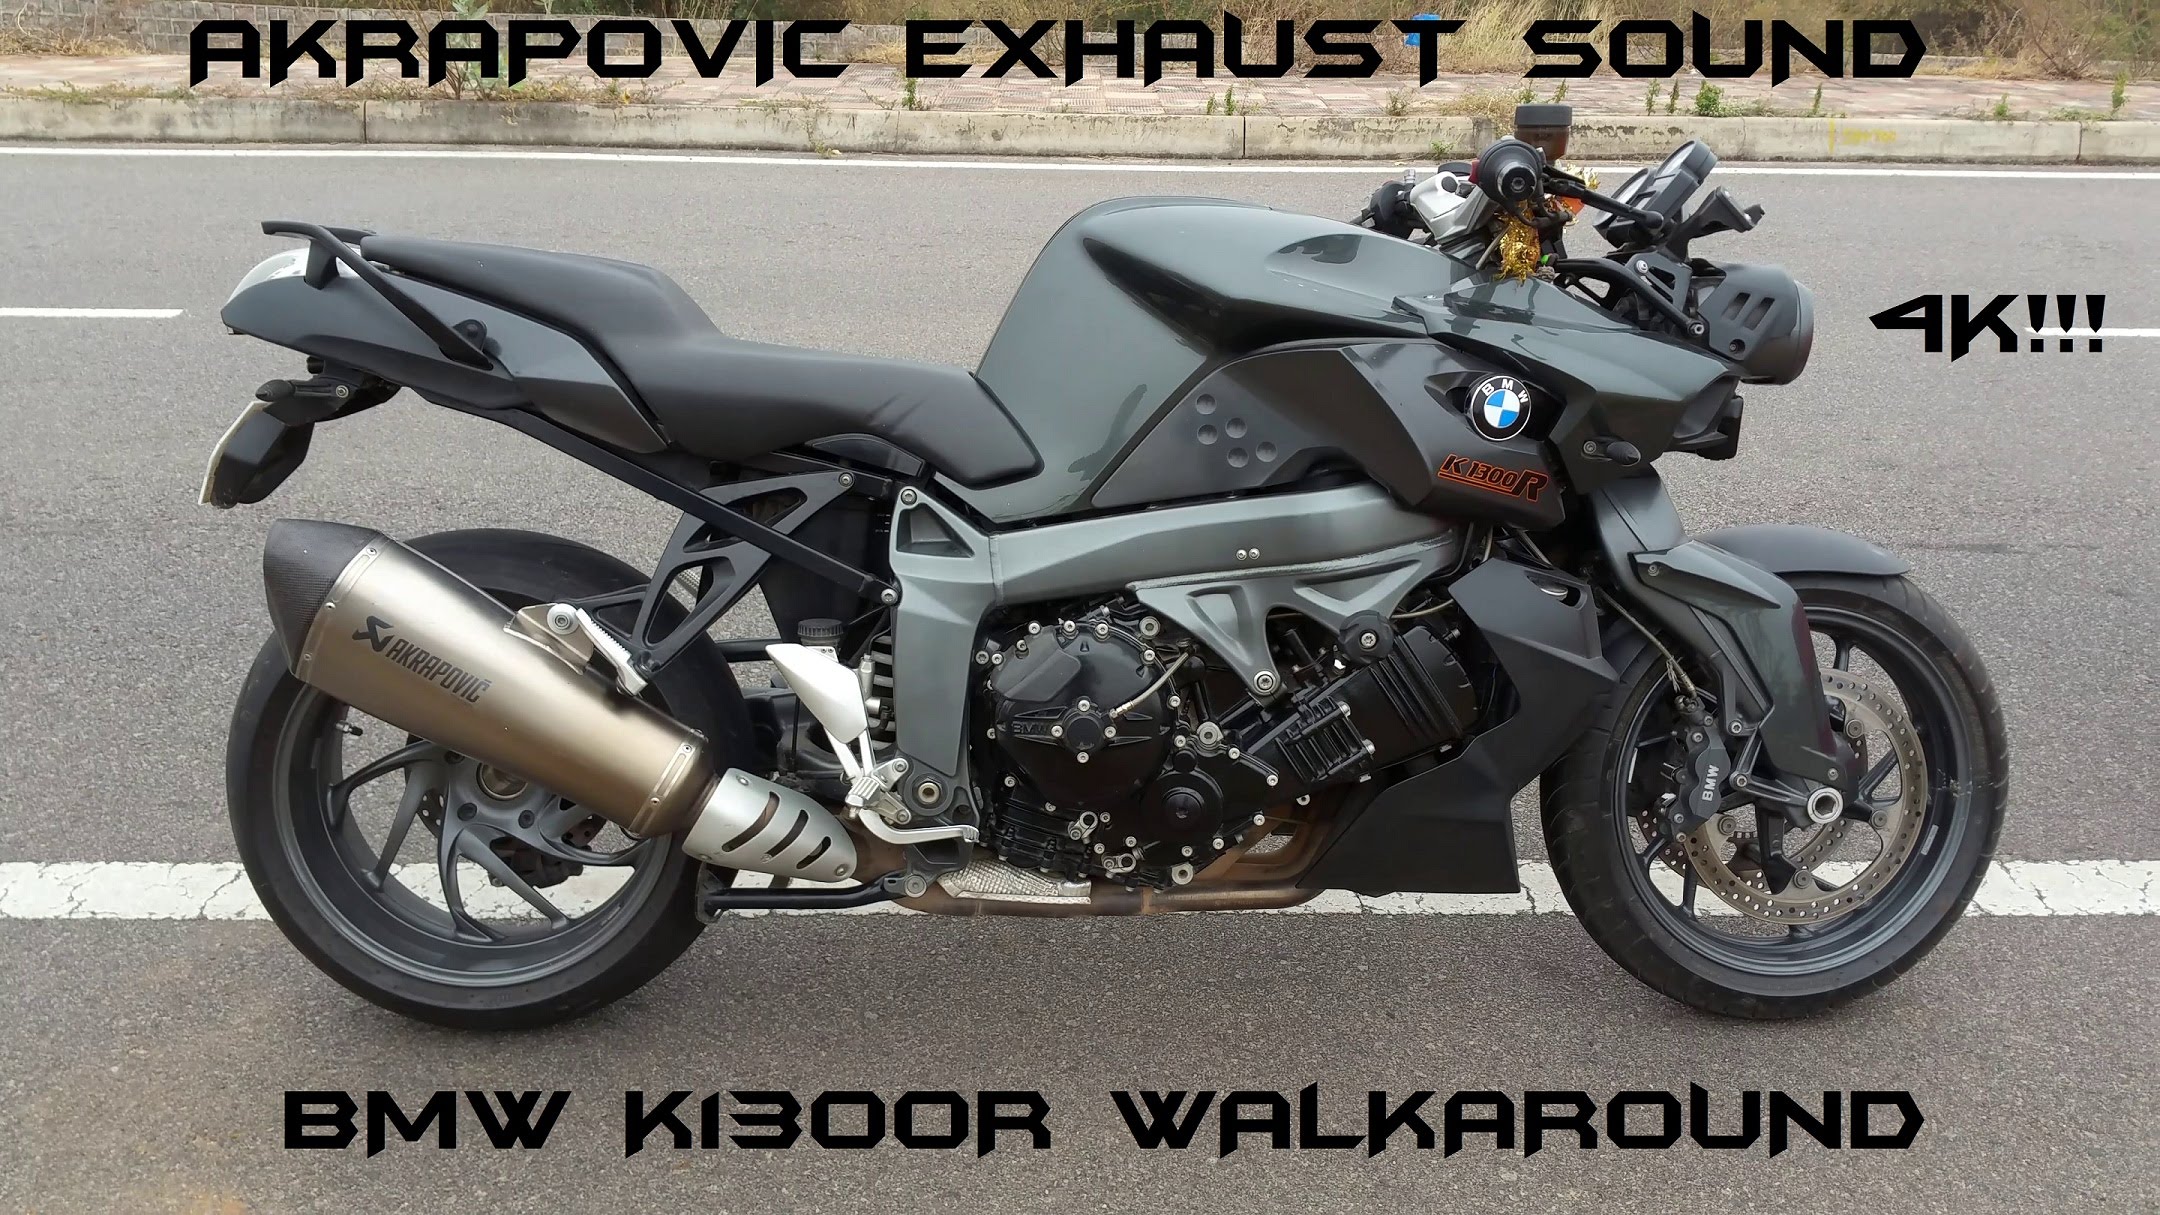 BMW K1300R Walkaround/Akrapovic Exhaust Sound In 4K!!! - YouTube